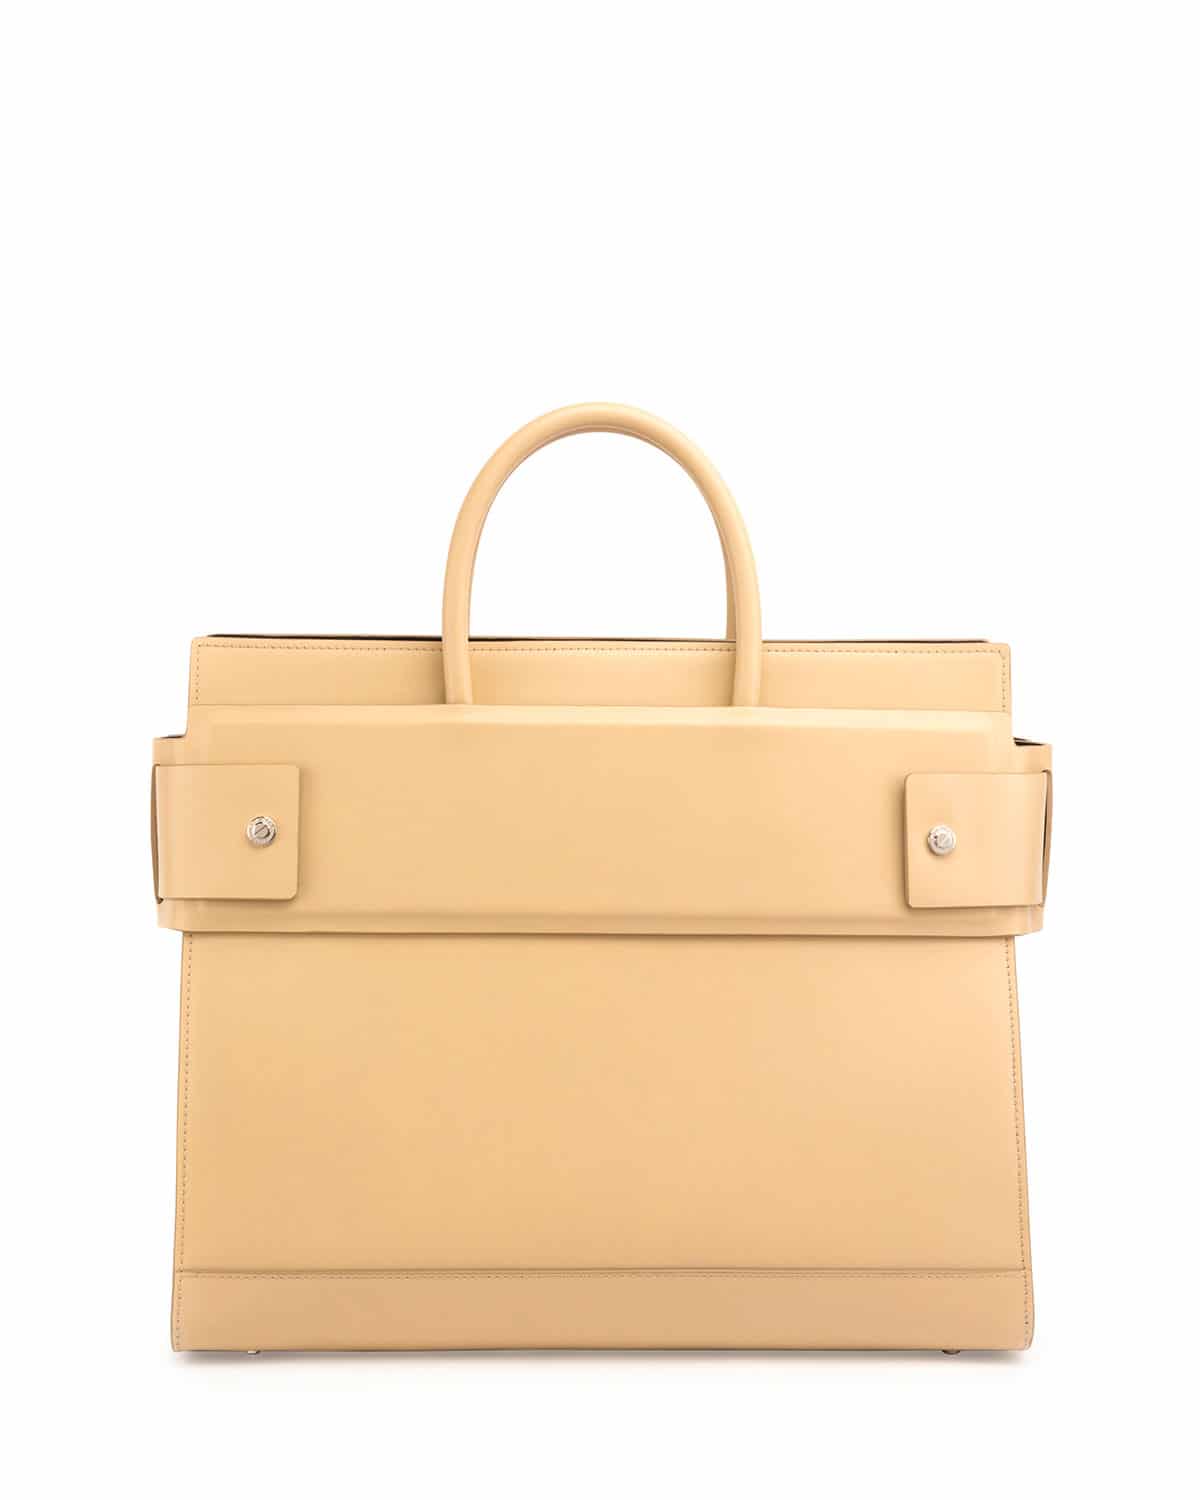 Givenchy Beige Horizon Small Satchel Bag